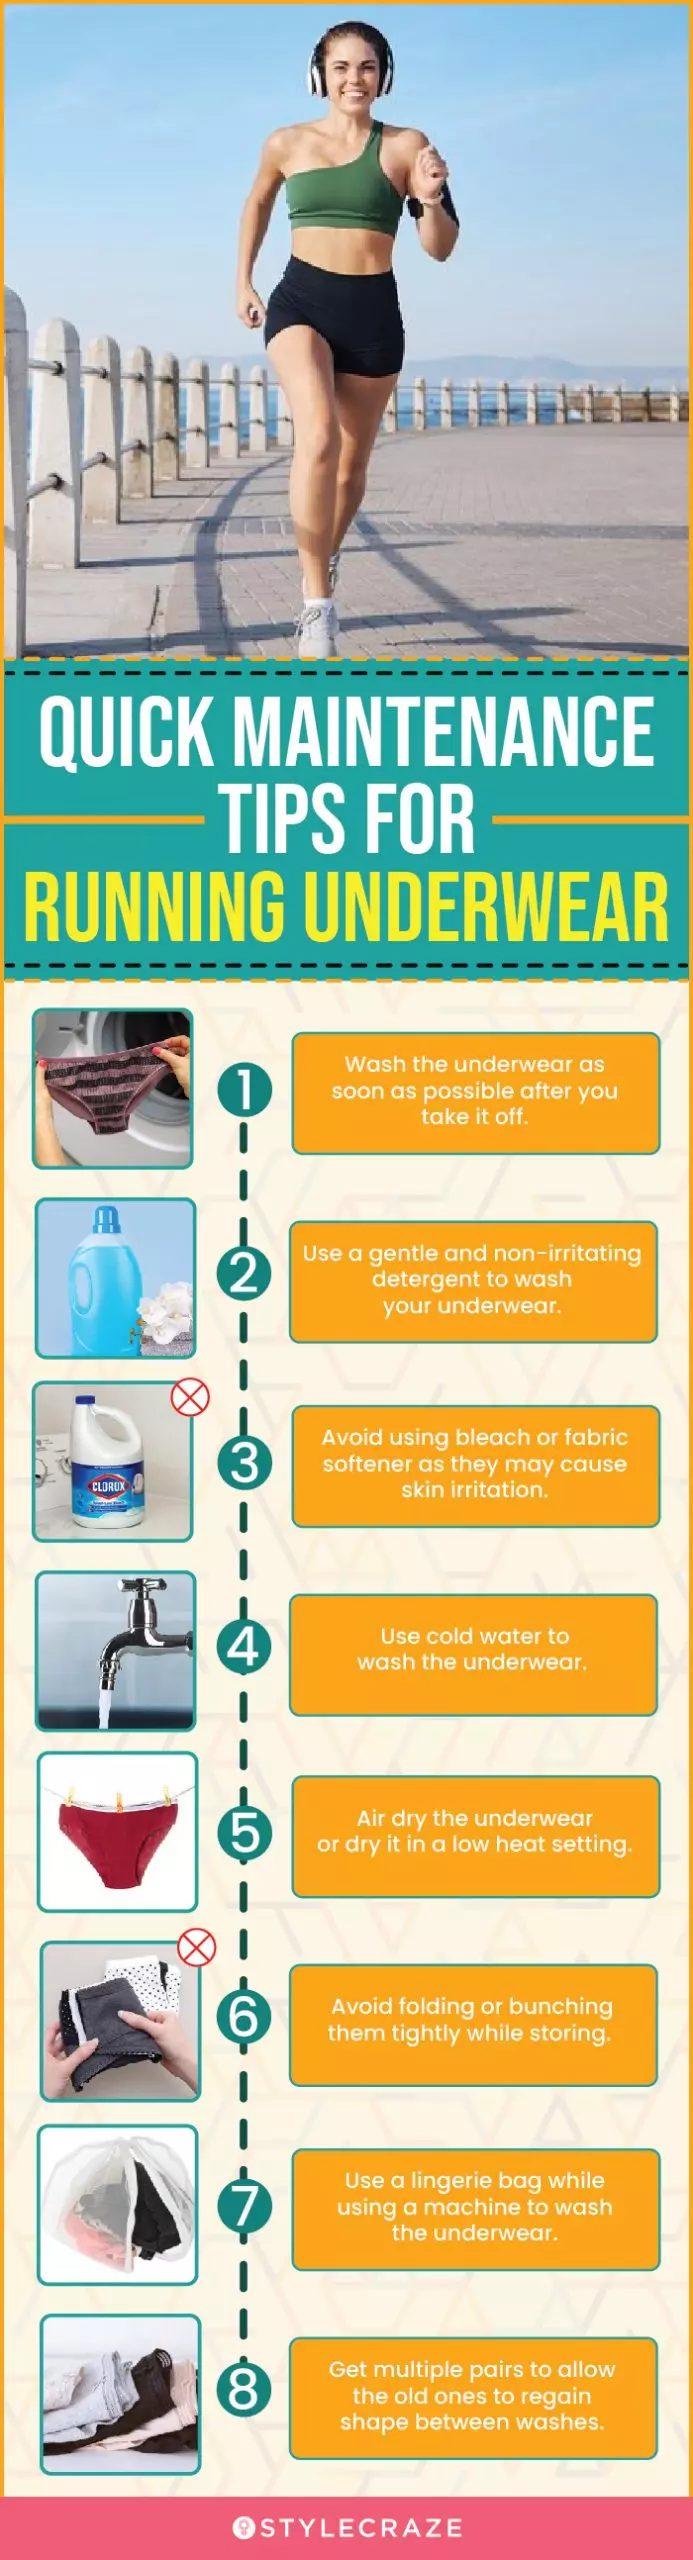 Quick Maintenance Tips For Running Underwear (infographic)